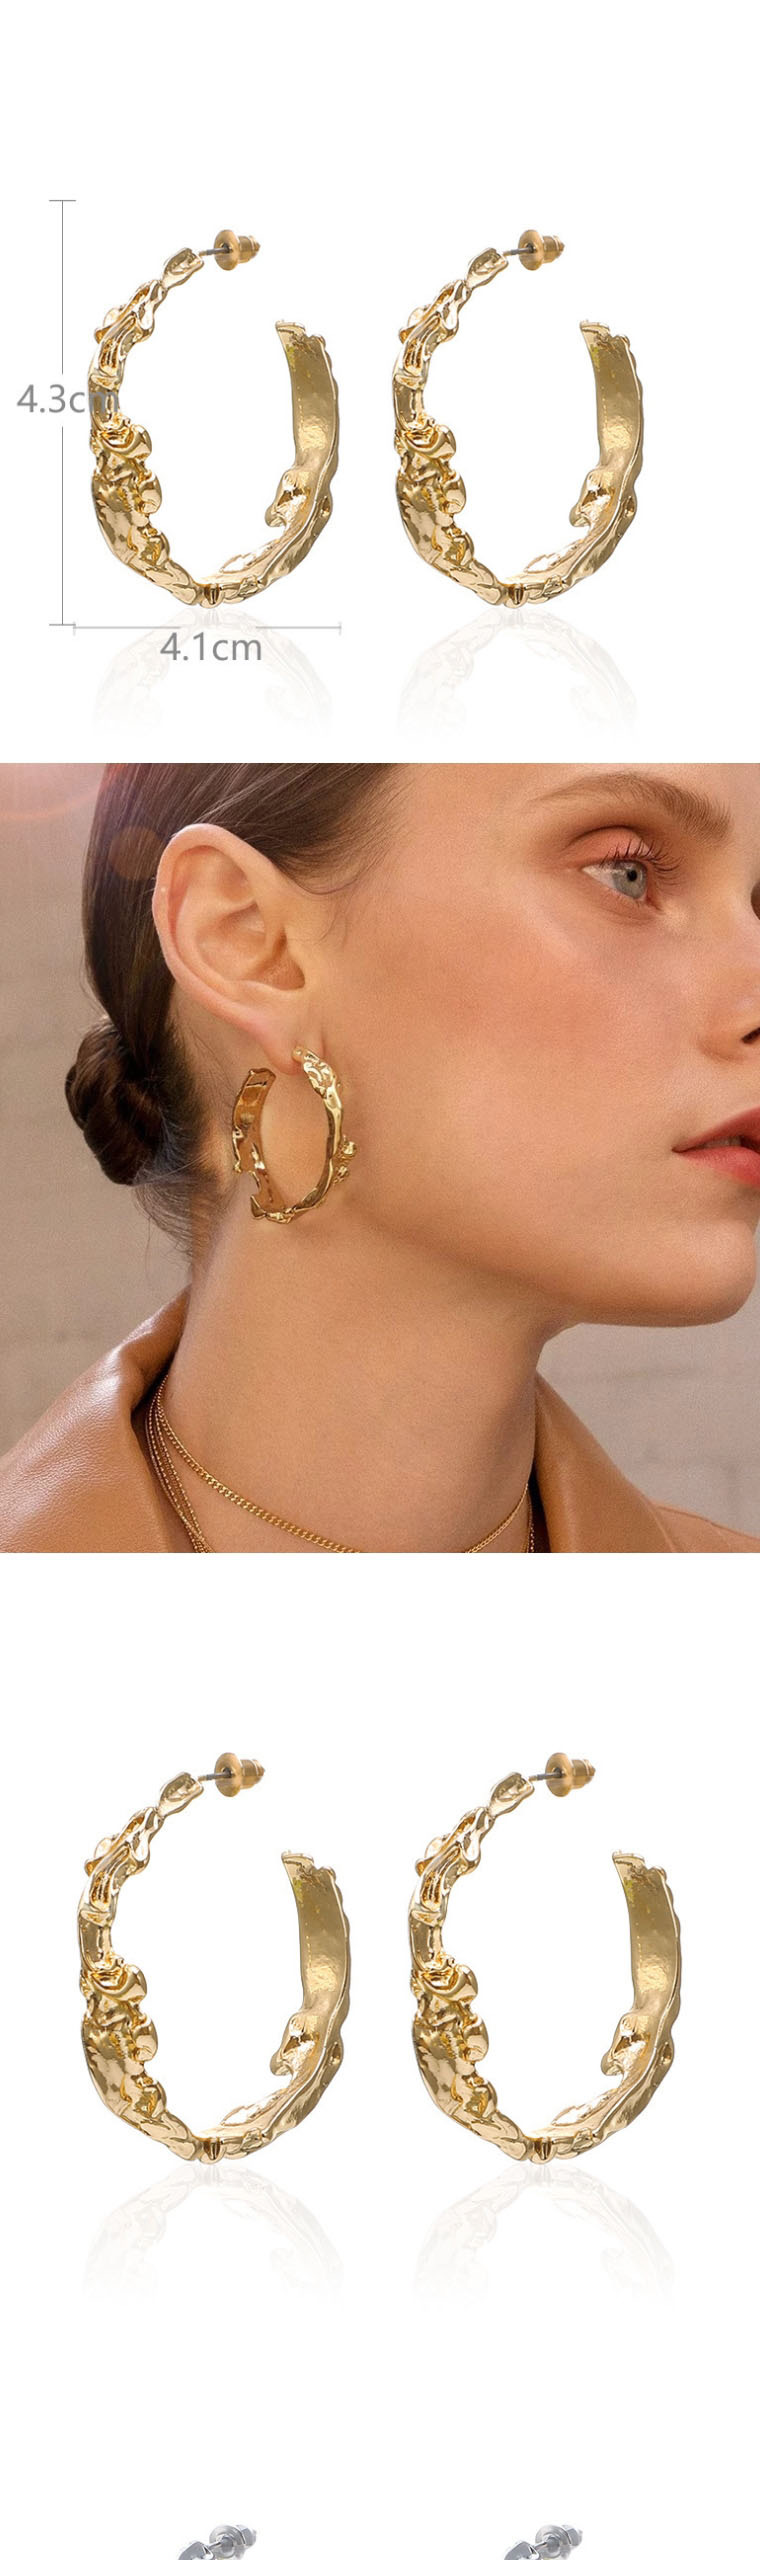 Fashion Silver Smooth Circle Cutout Geometric Earrings,Hoop Earrings